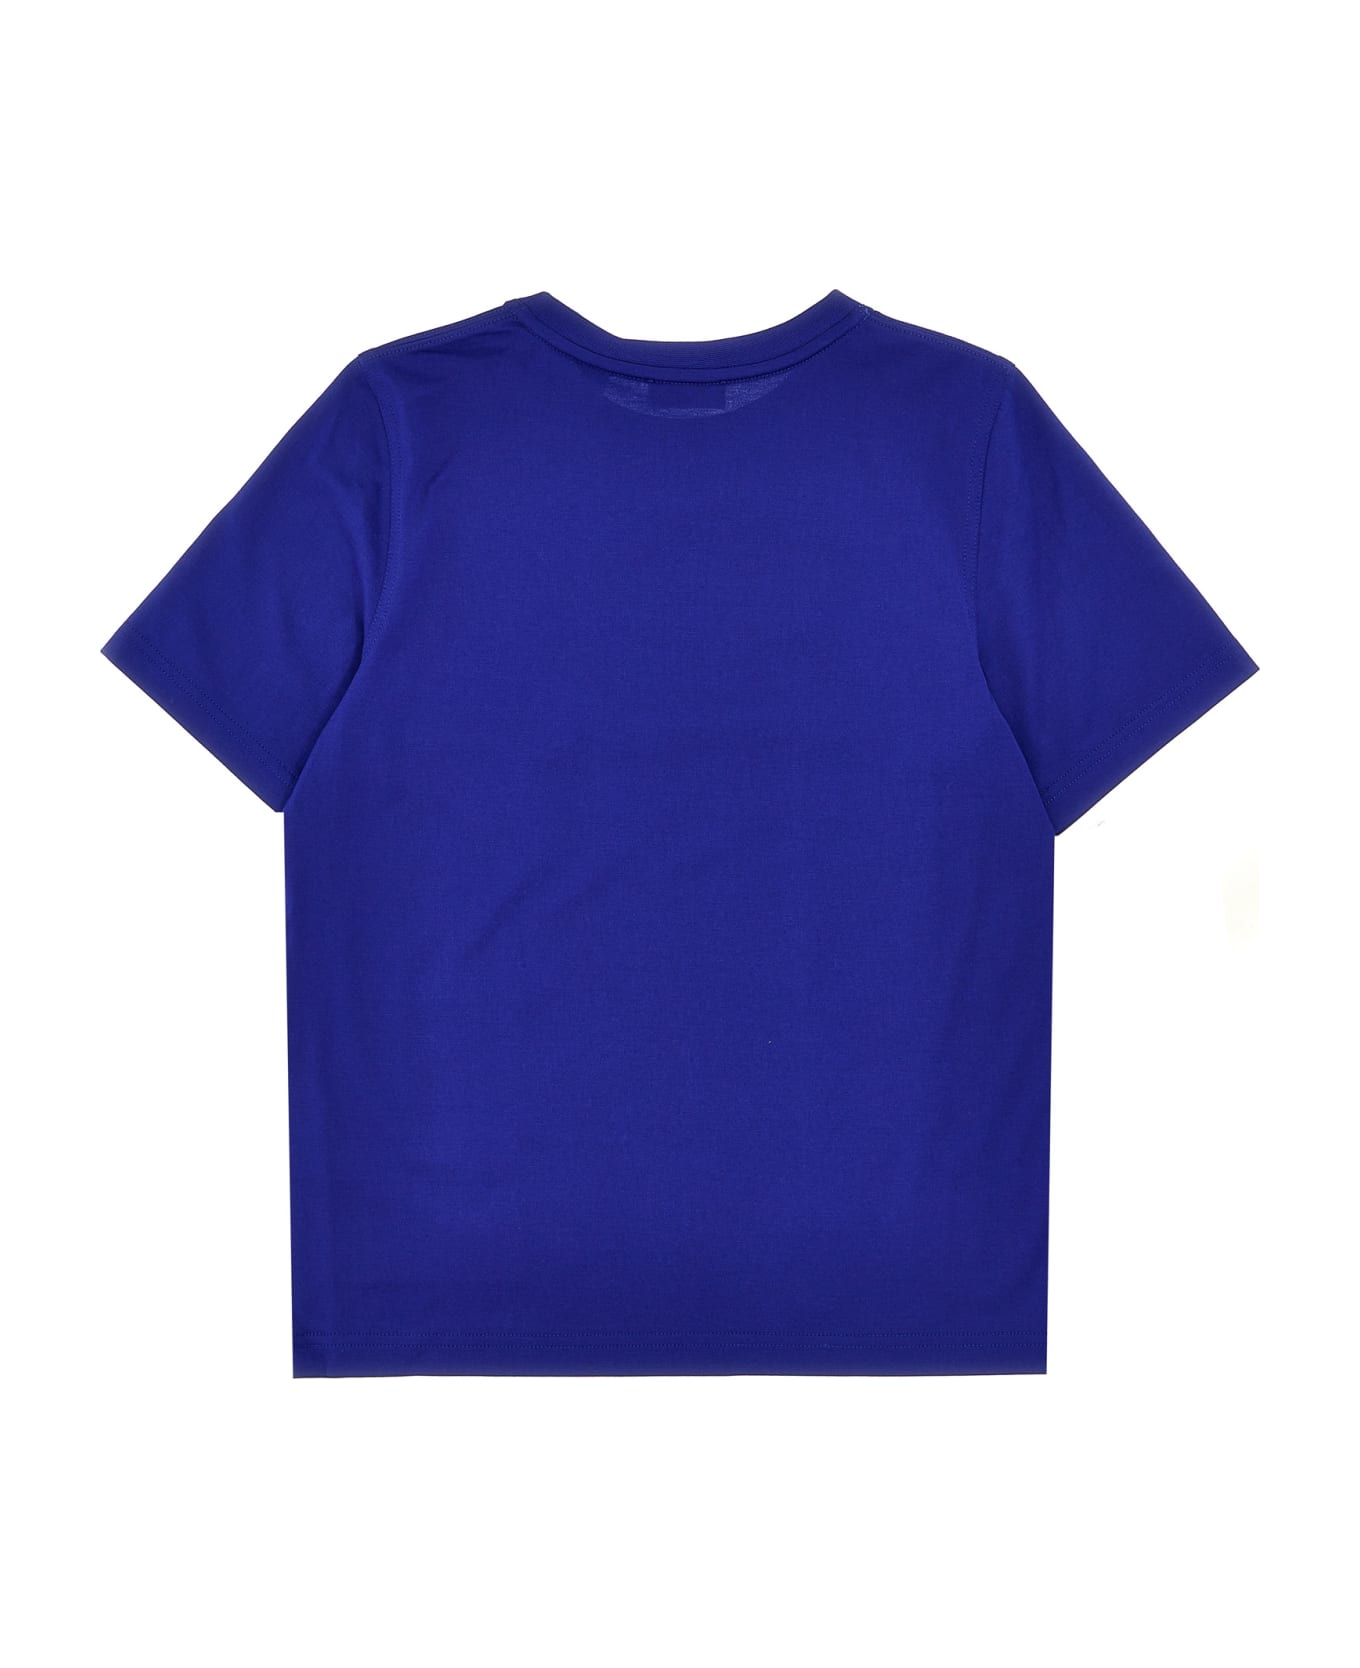 Burberry 'cedar' T-shirt - Blue